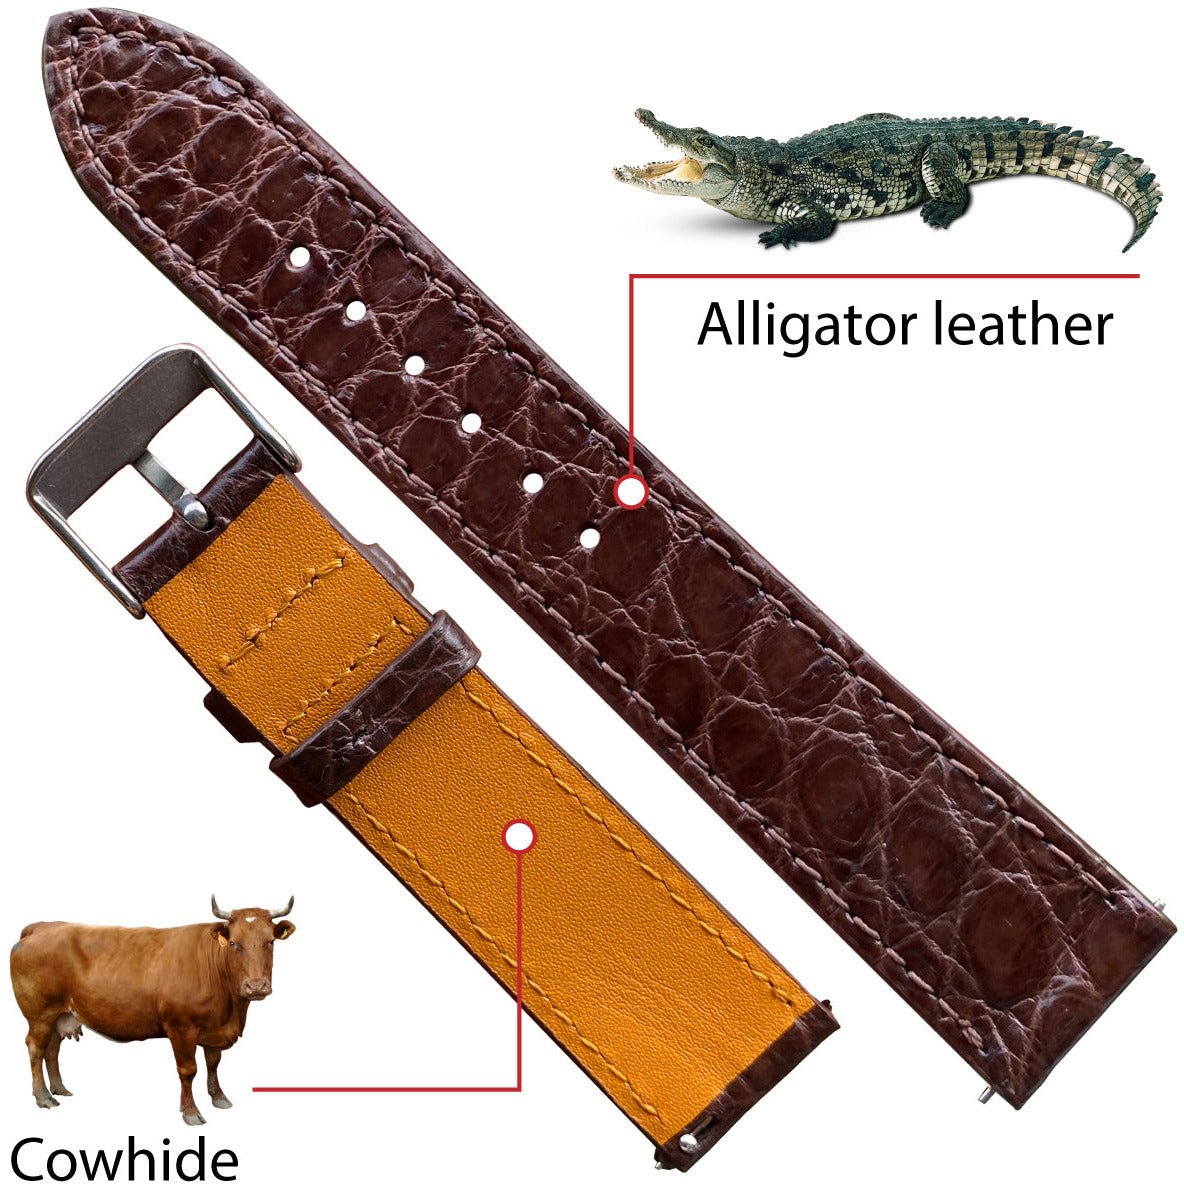 Dark Brown Flat Alligator Leather Watch Strap Men | No-Padding Smooth Gator Wristwatch Strap | DH-23 - Vinacreations